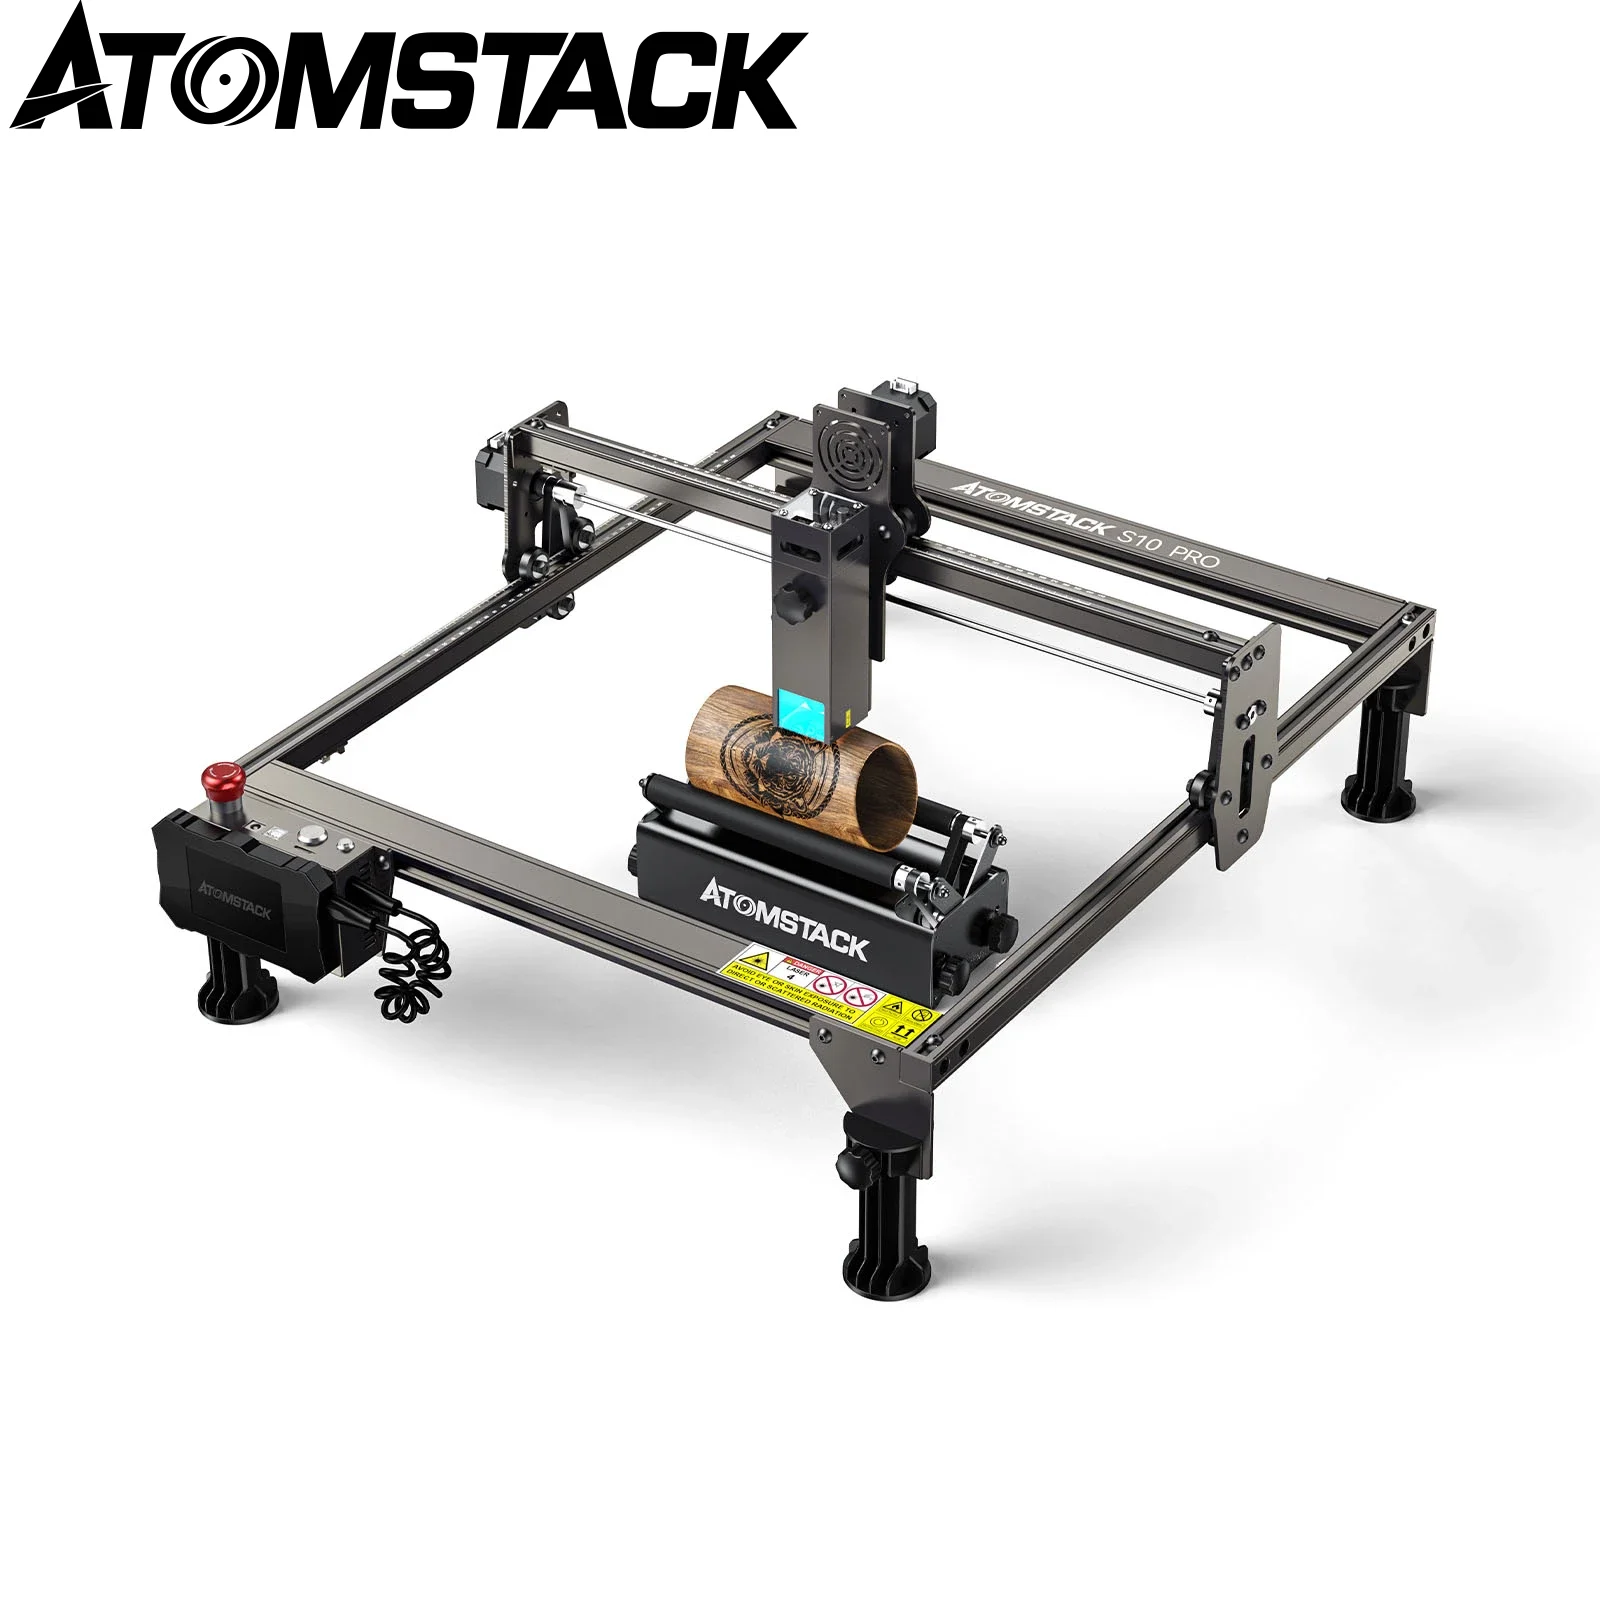 

ATOMSTACK A10 S10 X7 Pro 50W Dual-Laser Engraver Machine Offline Control Laser Aluminum Alloy Metal Cutting Engraving CNC Router